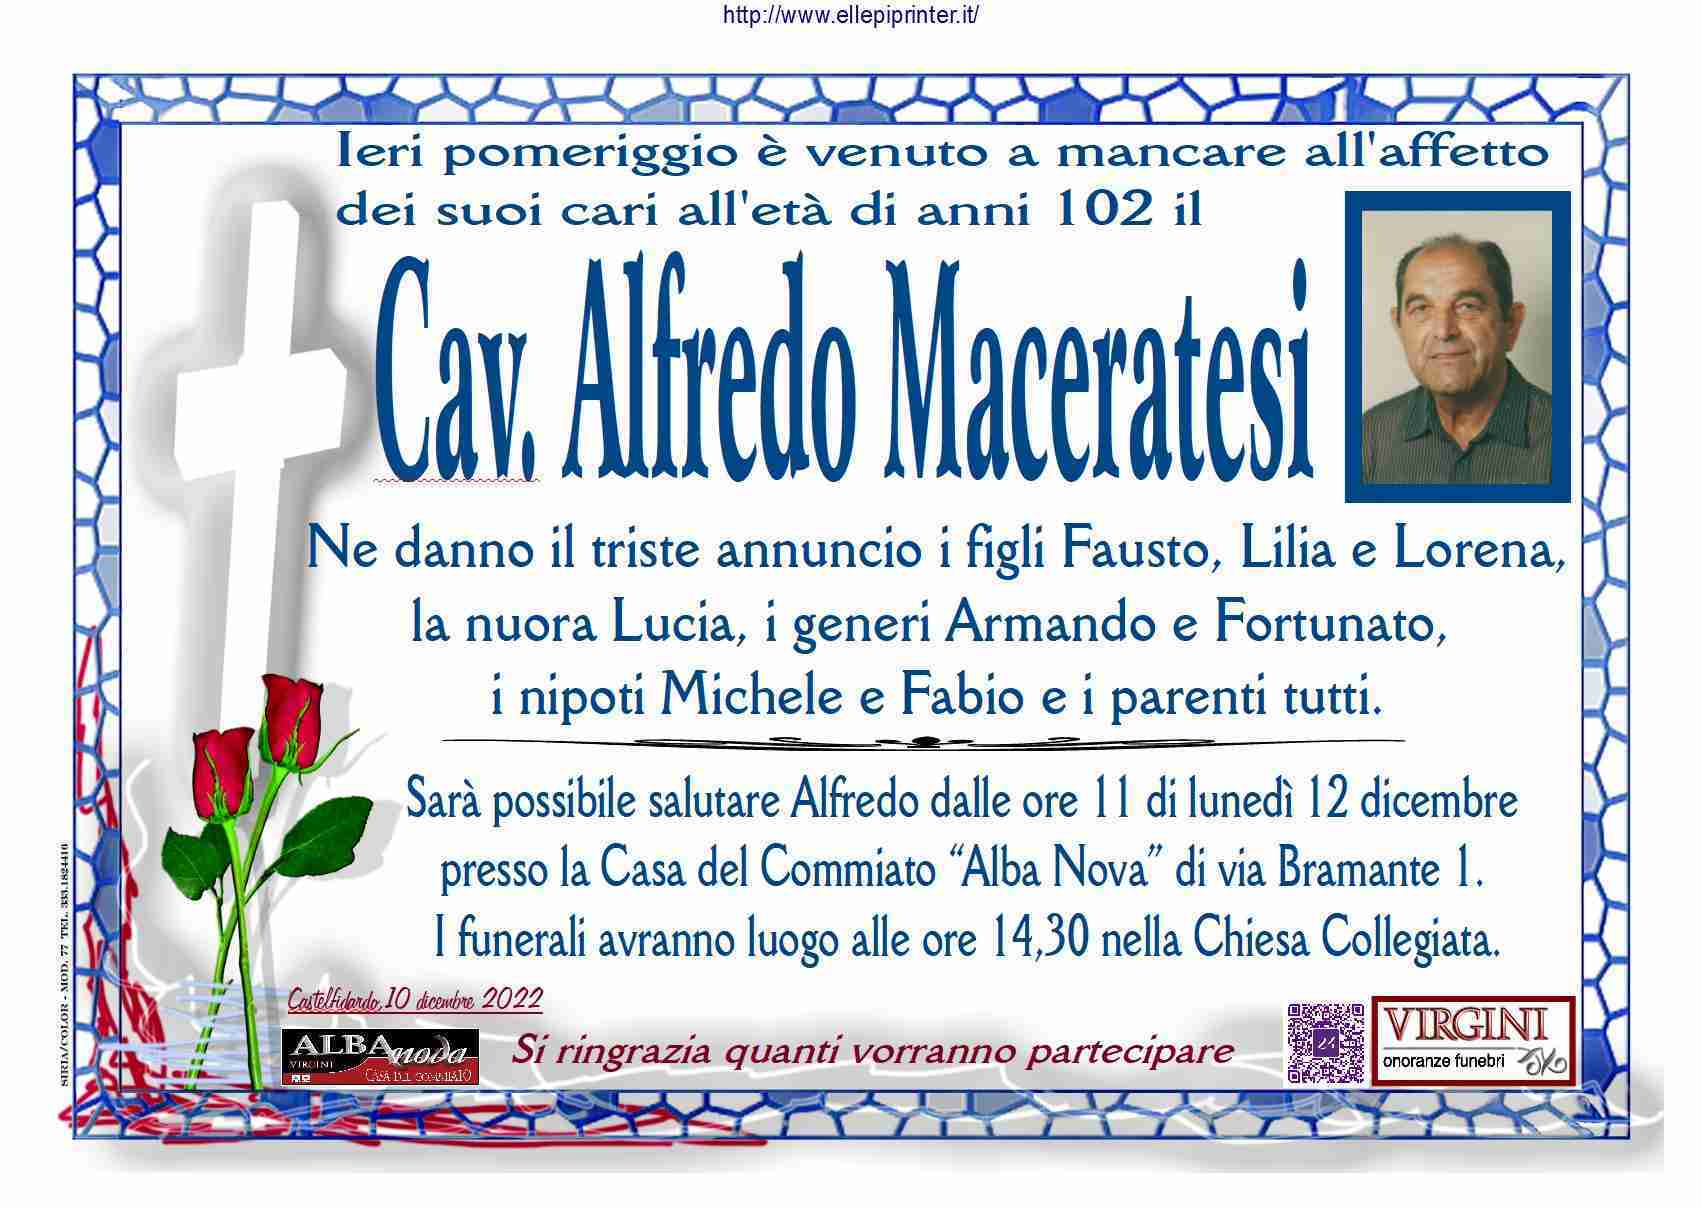 Alfredo Maceratesi